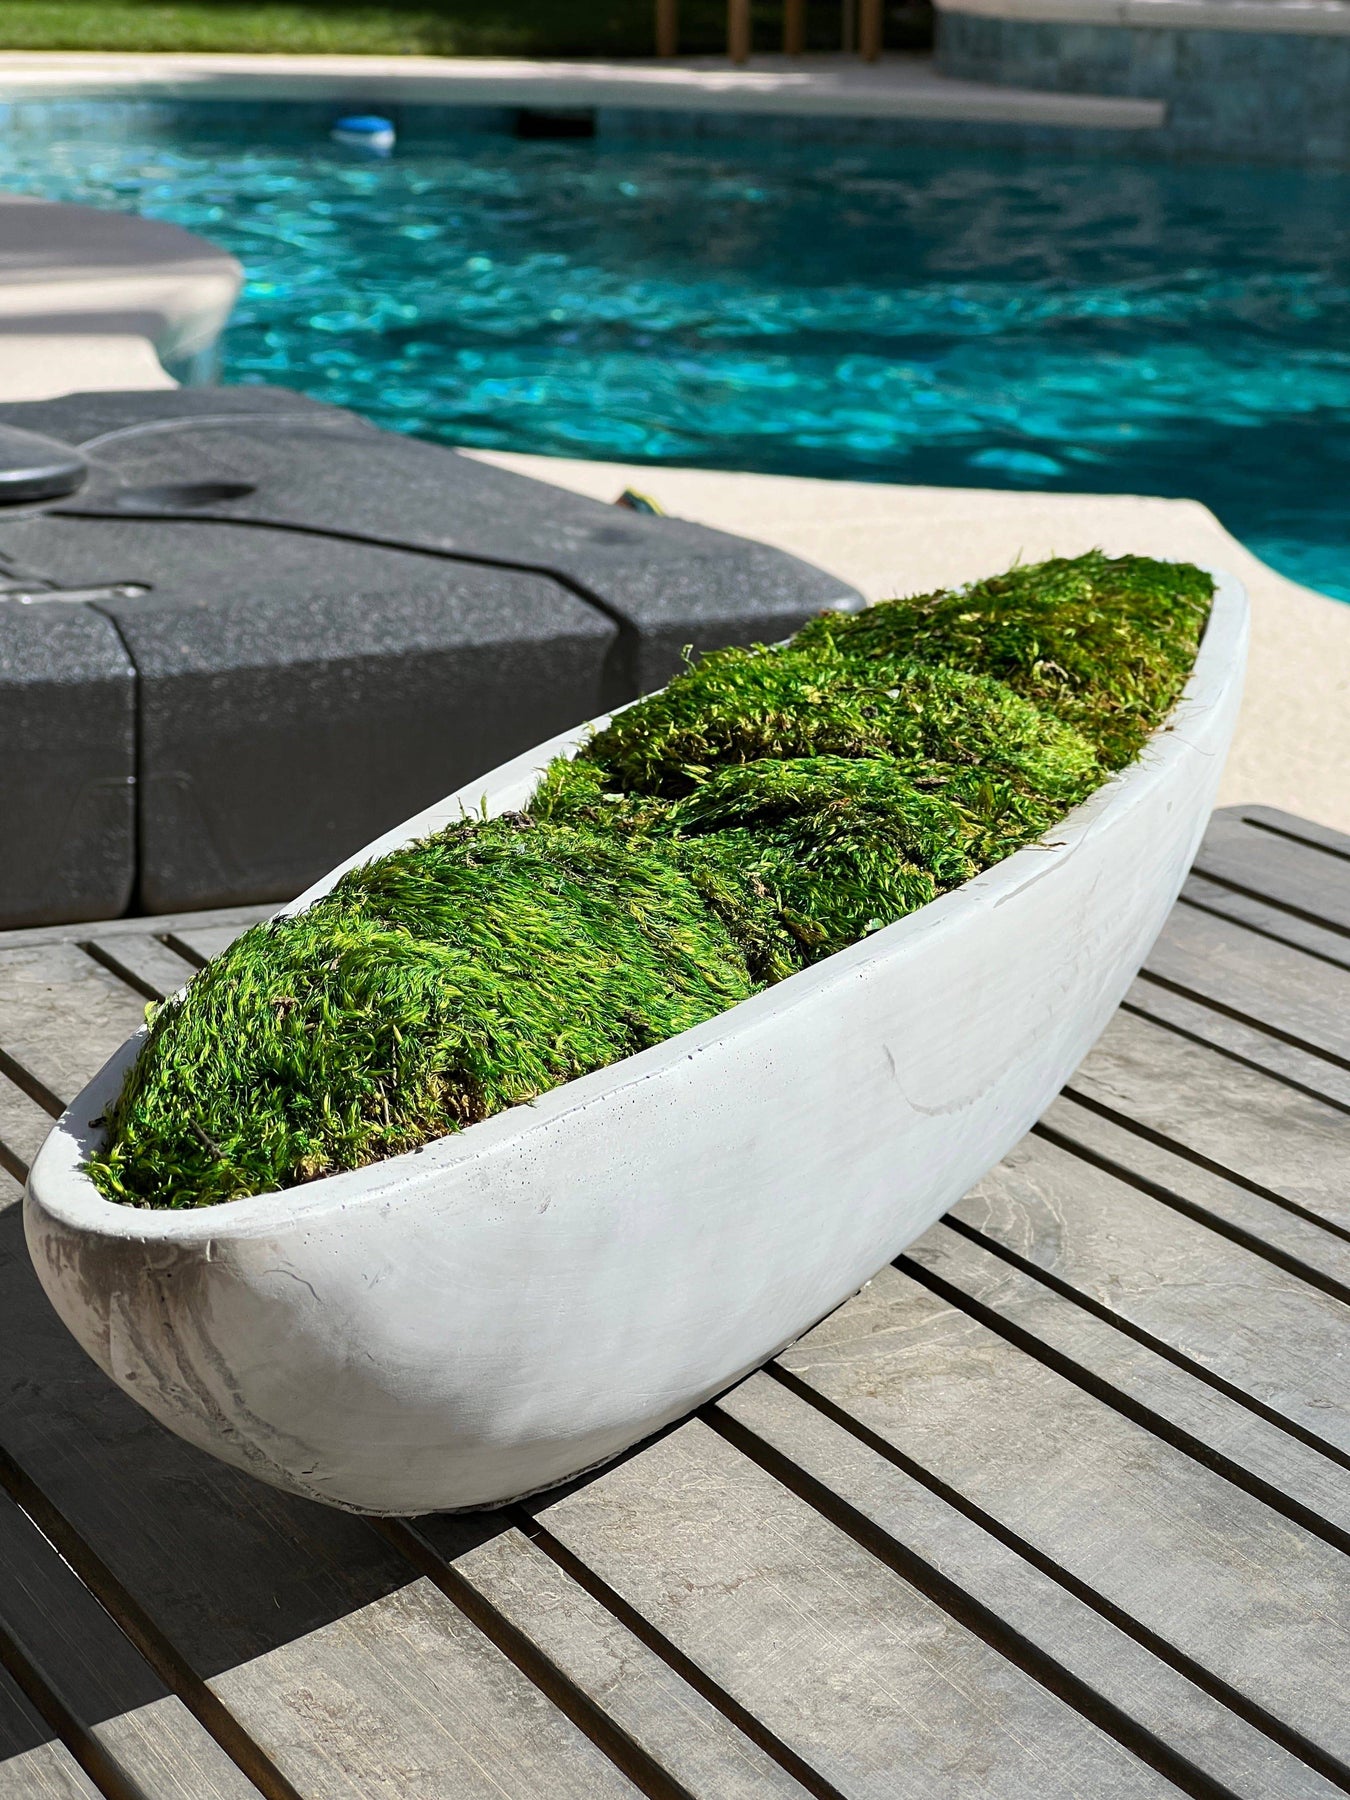 SALE Zen Concrete Handmade Moss Bowl Terrarium Centerpiece